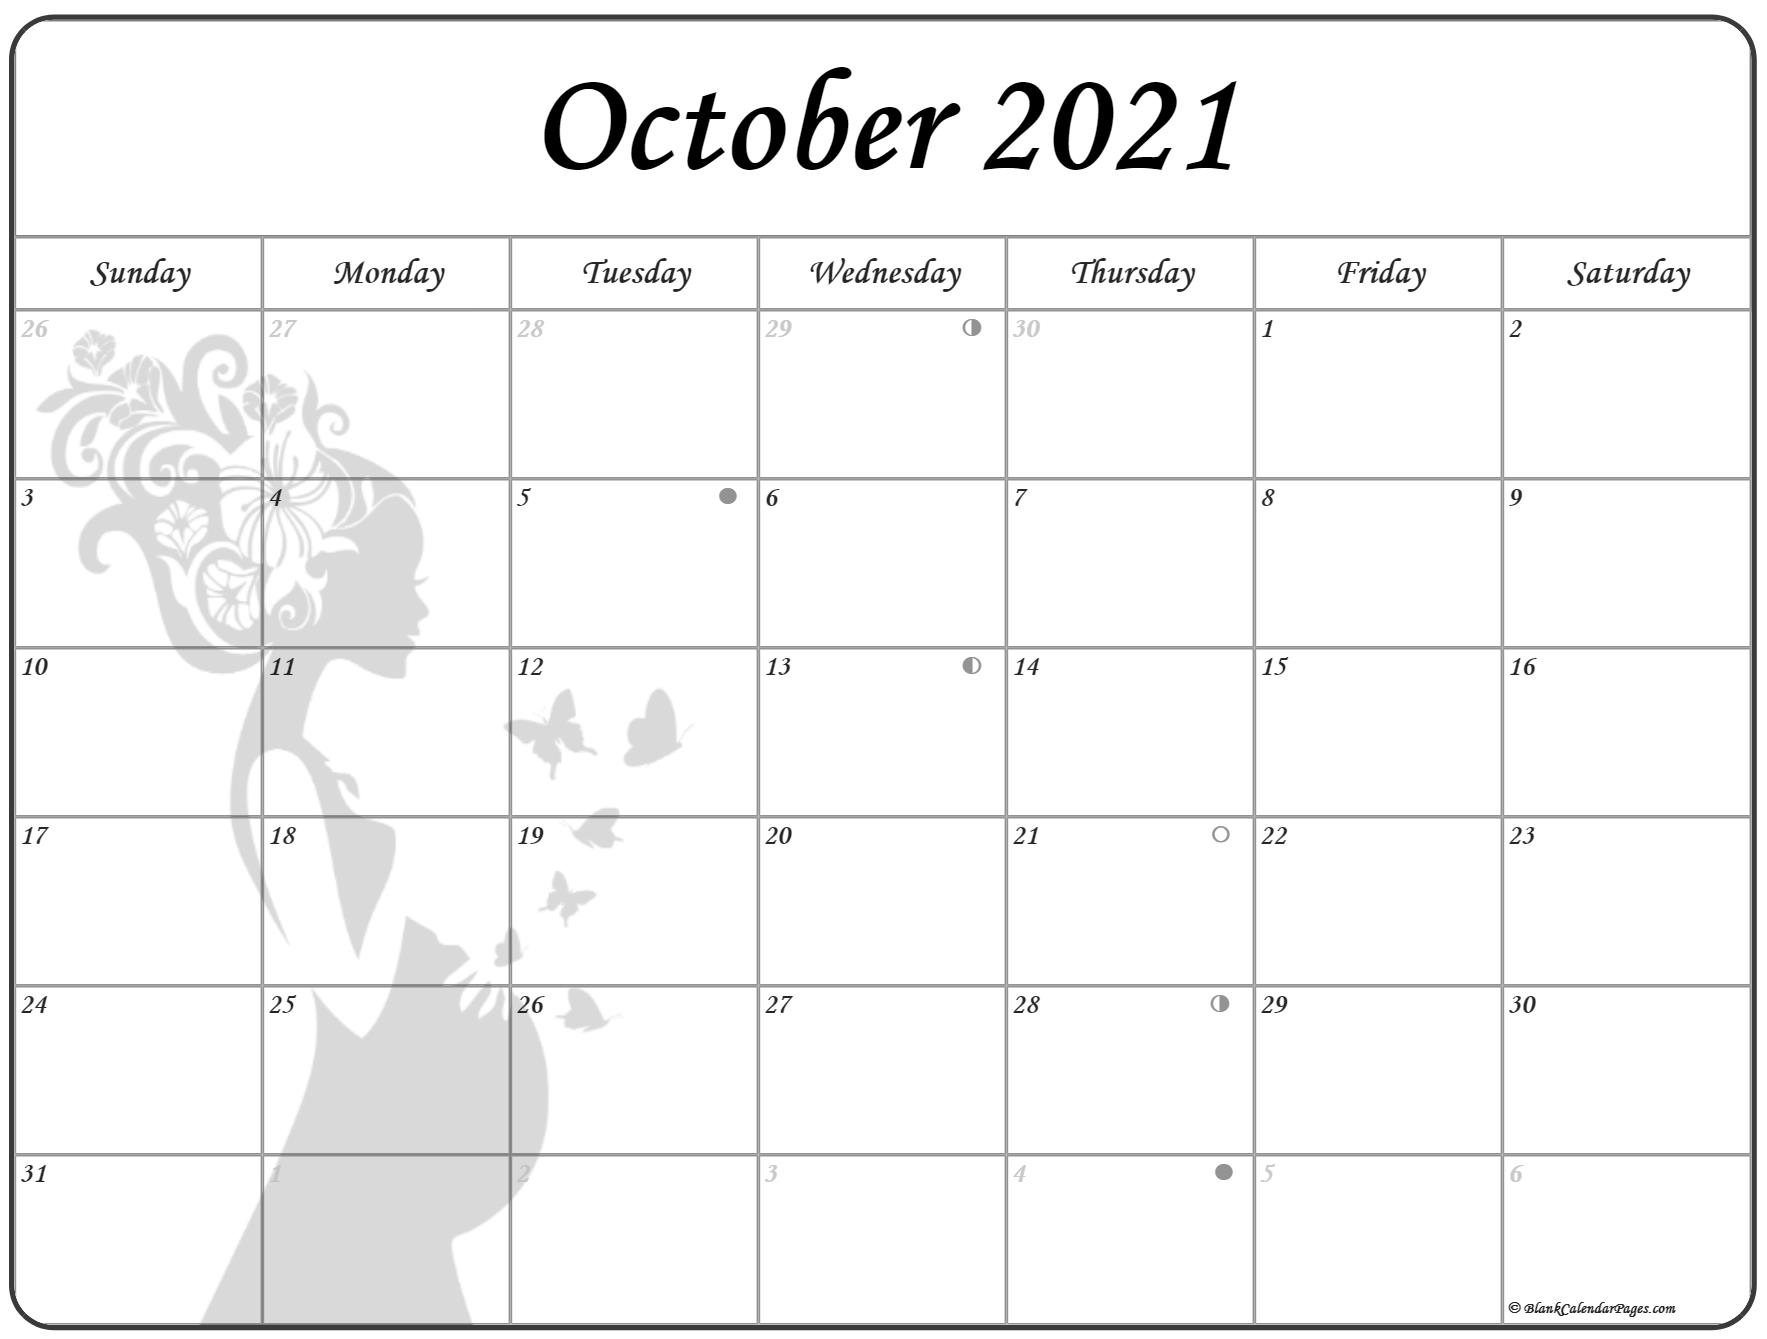 October 2021 Pregnancy Calendar Fertility Calendar